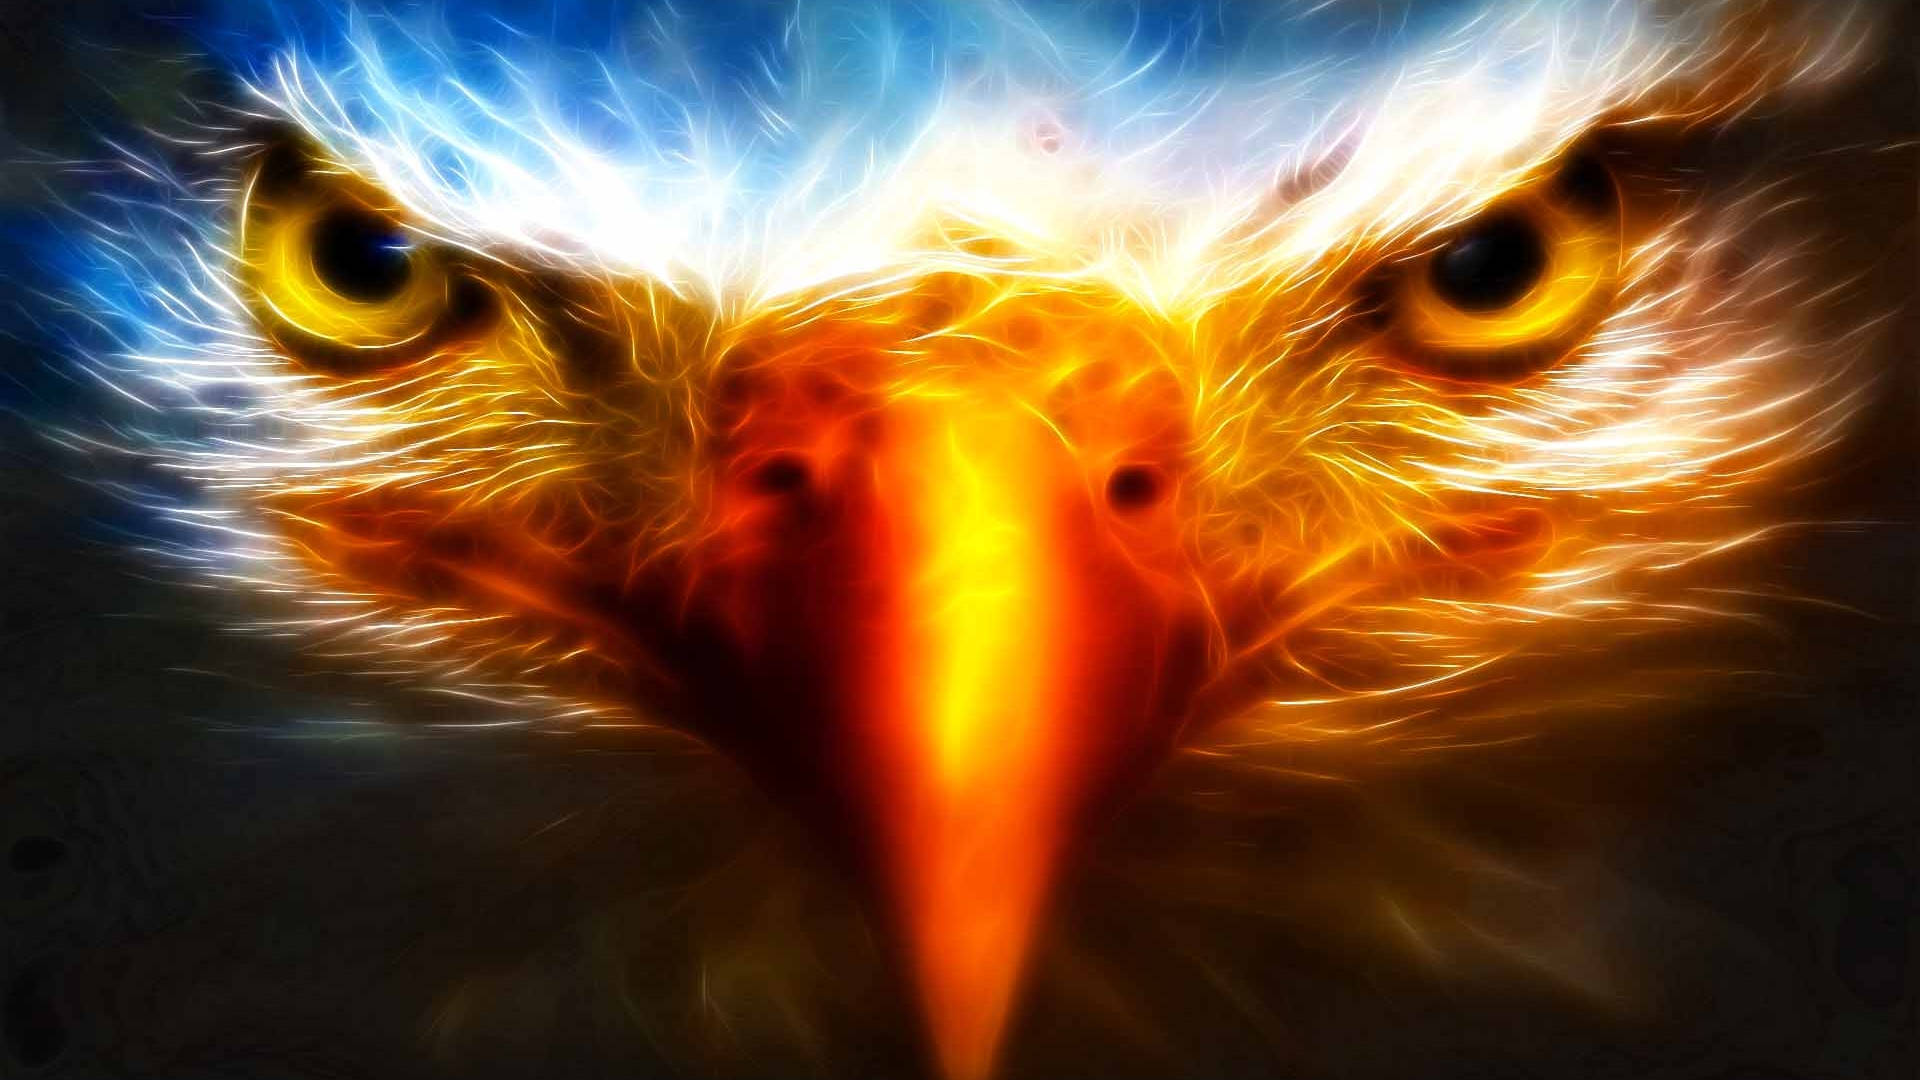 Aguila Bird Face Close-up Wallpaper